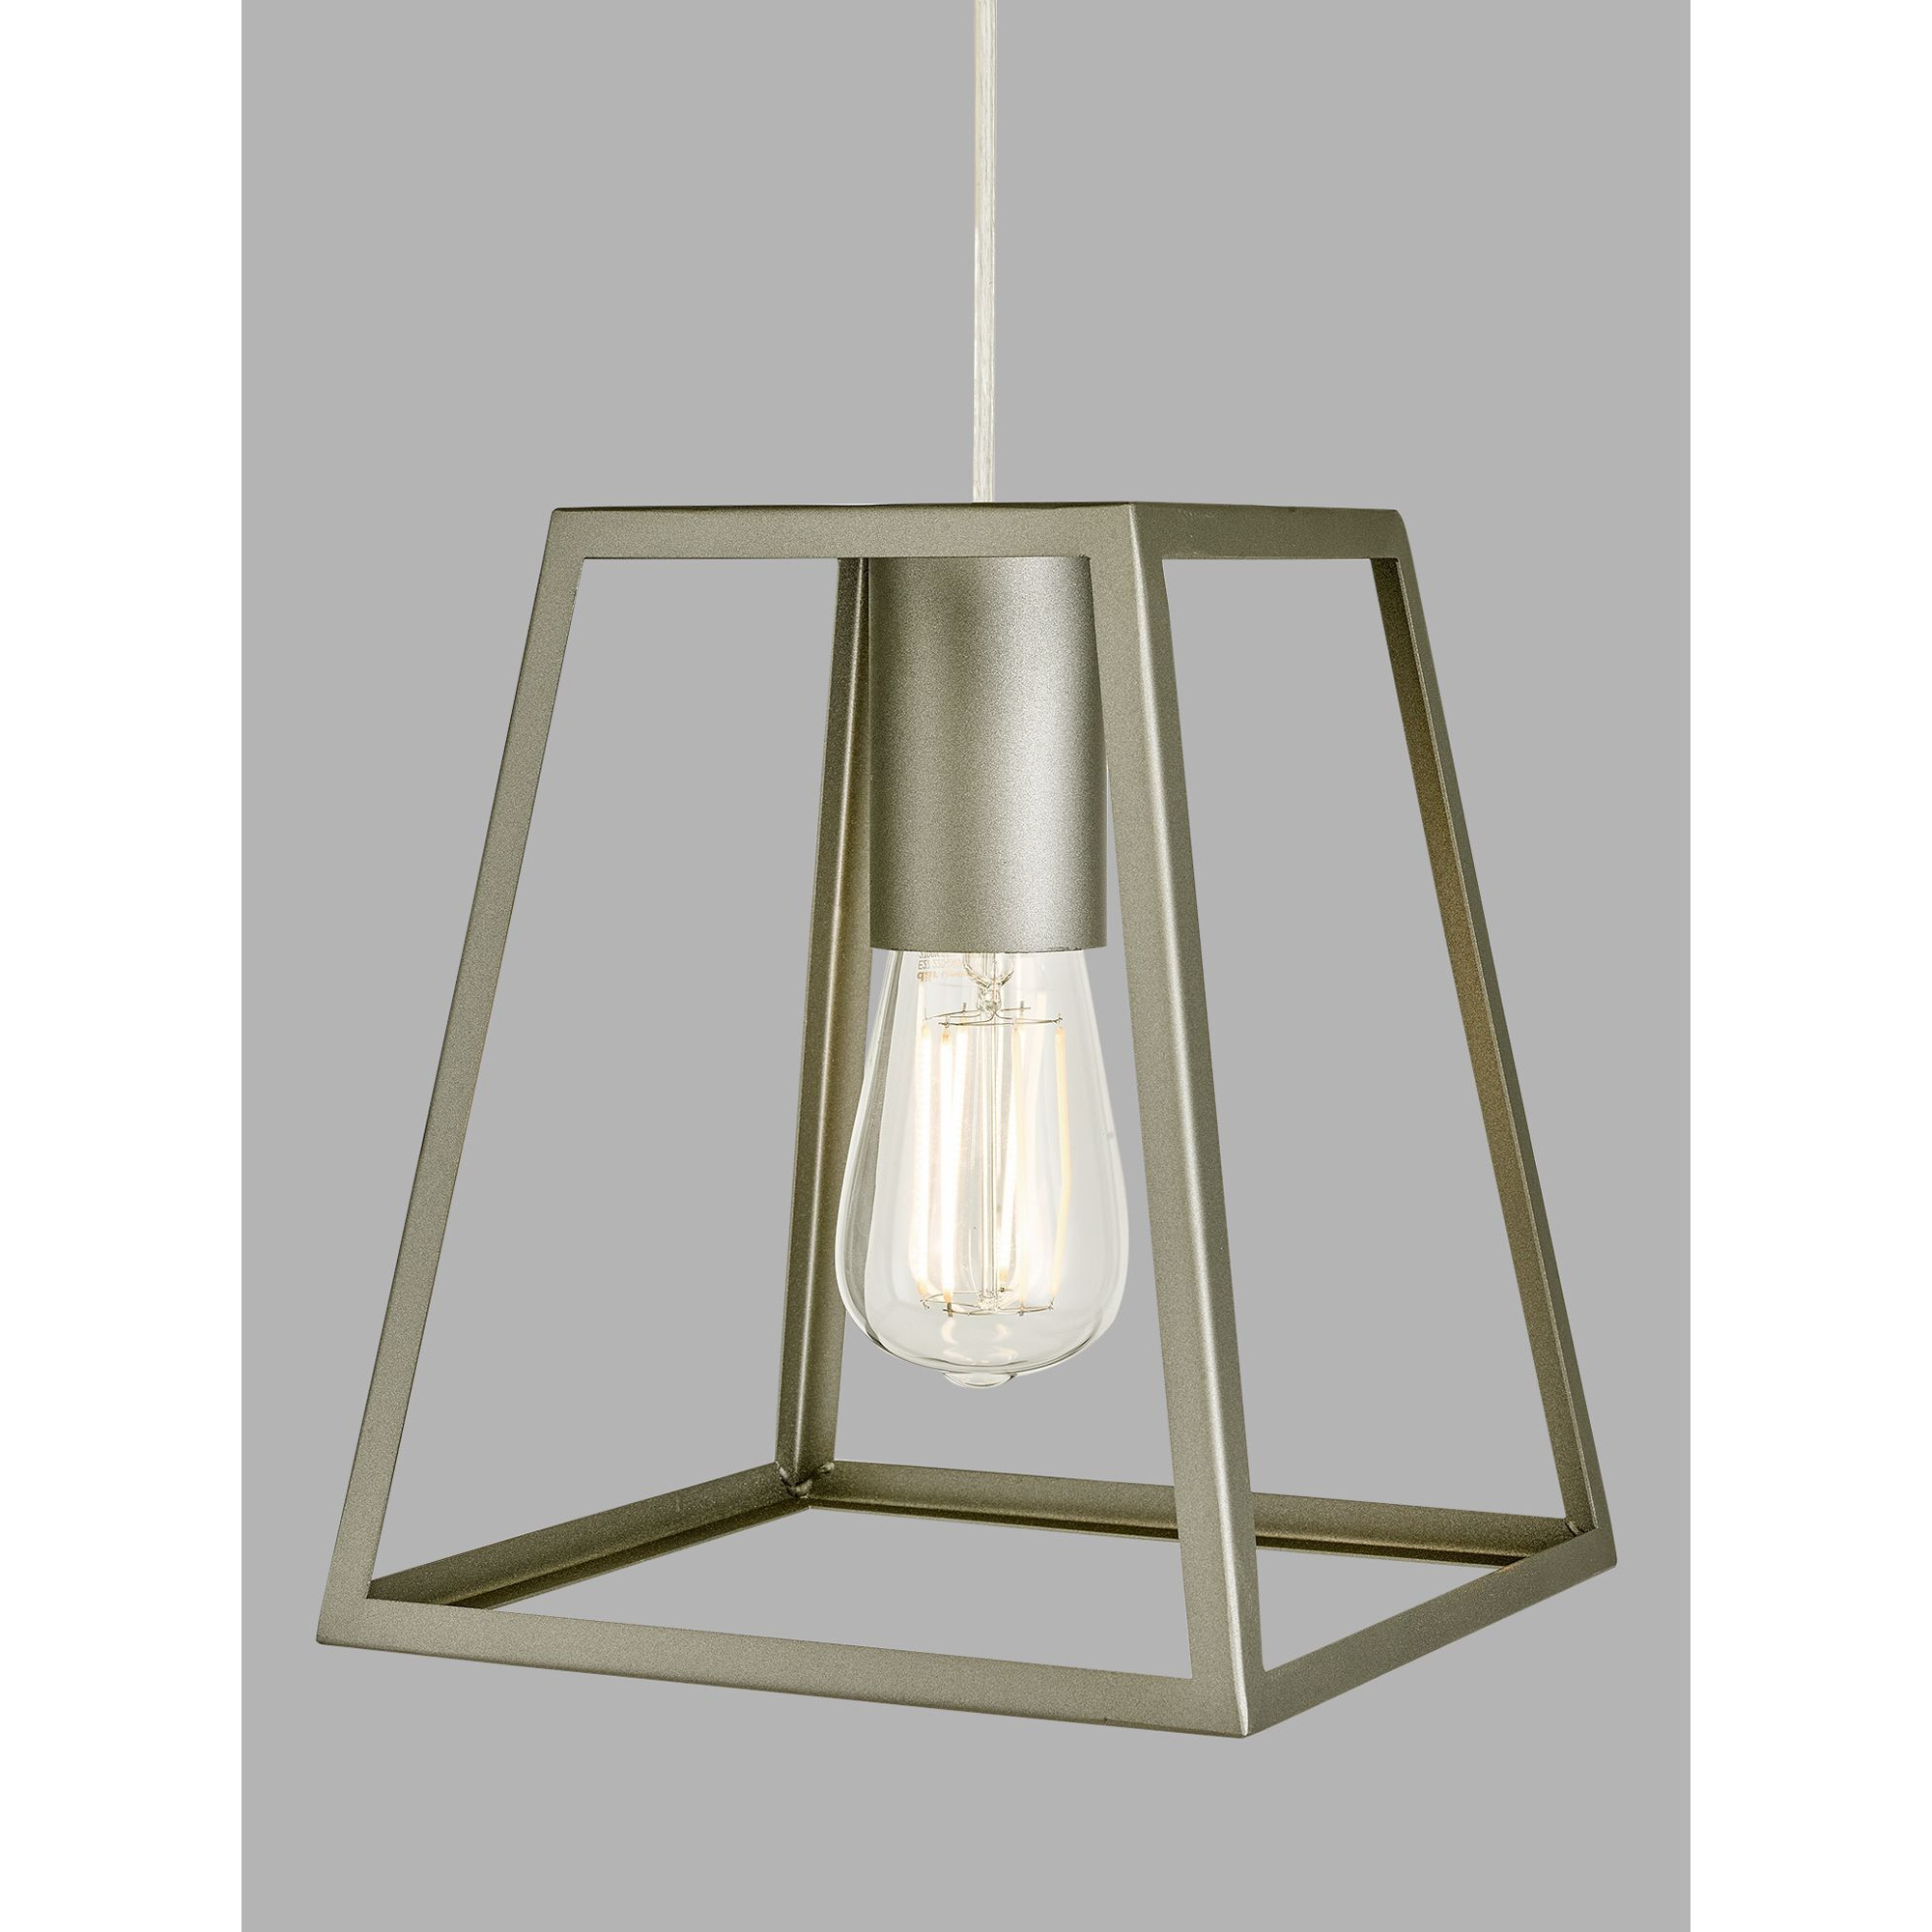 John Lewis ANYDAY Industrial Lantern Ceiling Shade - image 1